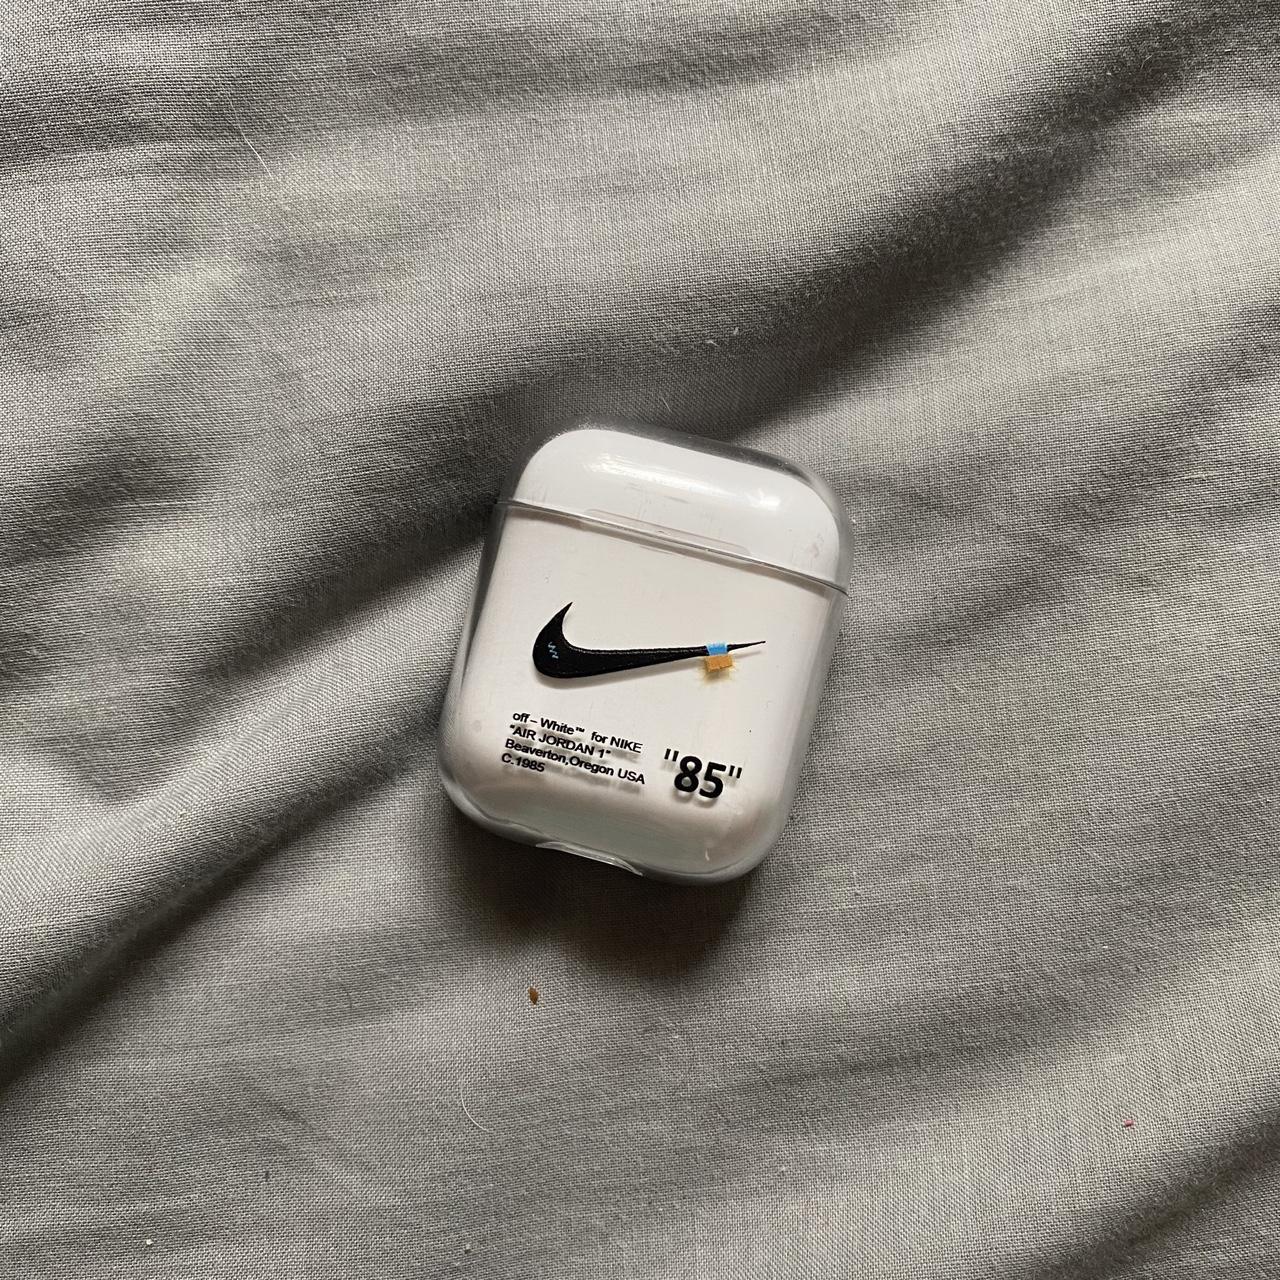 Nike AirPod case